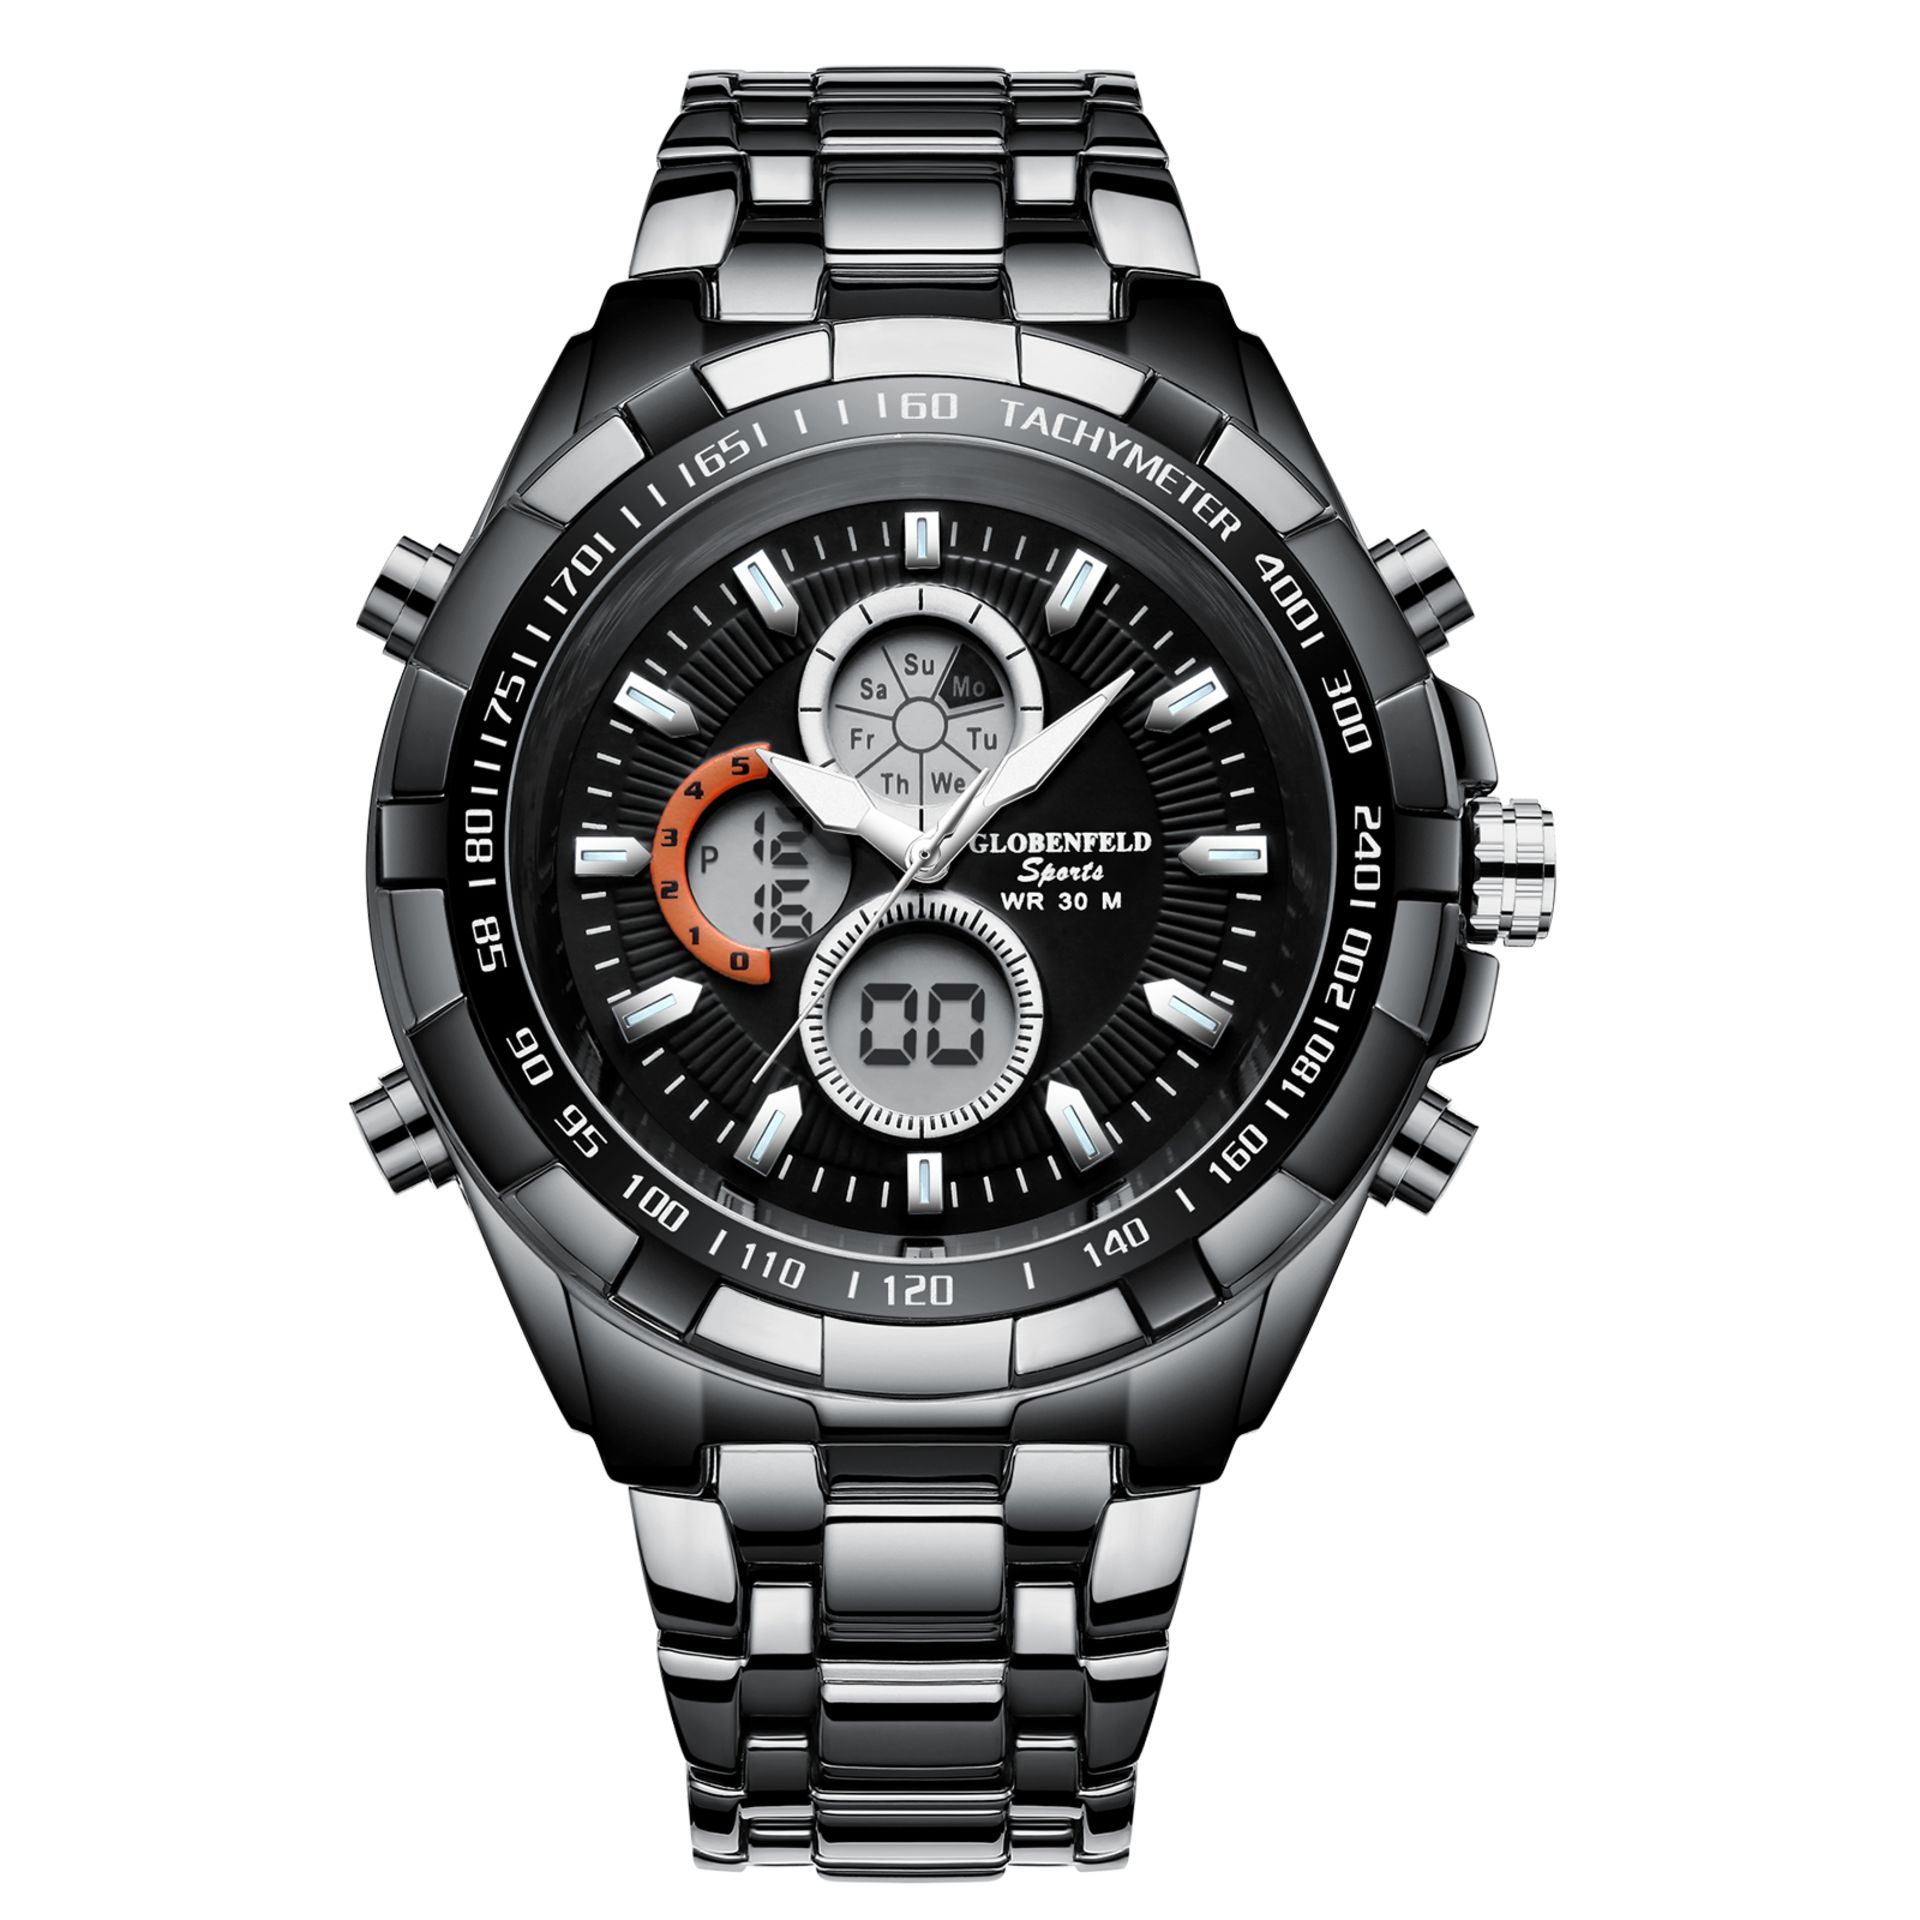 V Brand New Globenfeld Sport Shark Grey Watch - Sony Battery - Stainless Steel Crown - High - Image 2 of 4